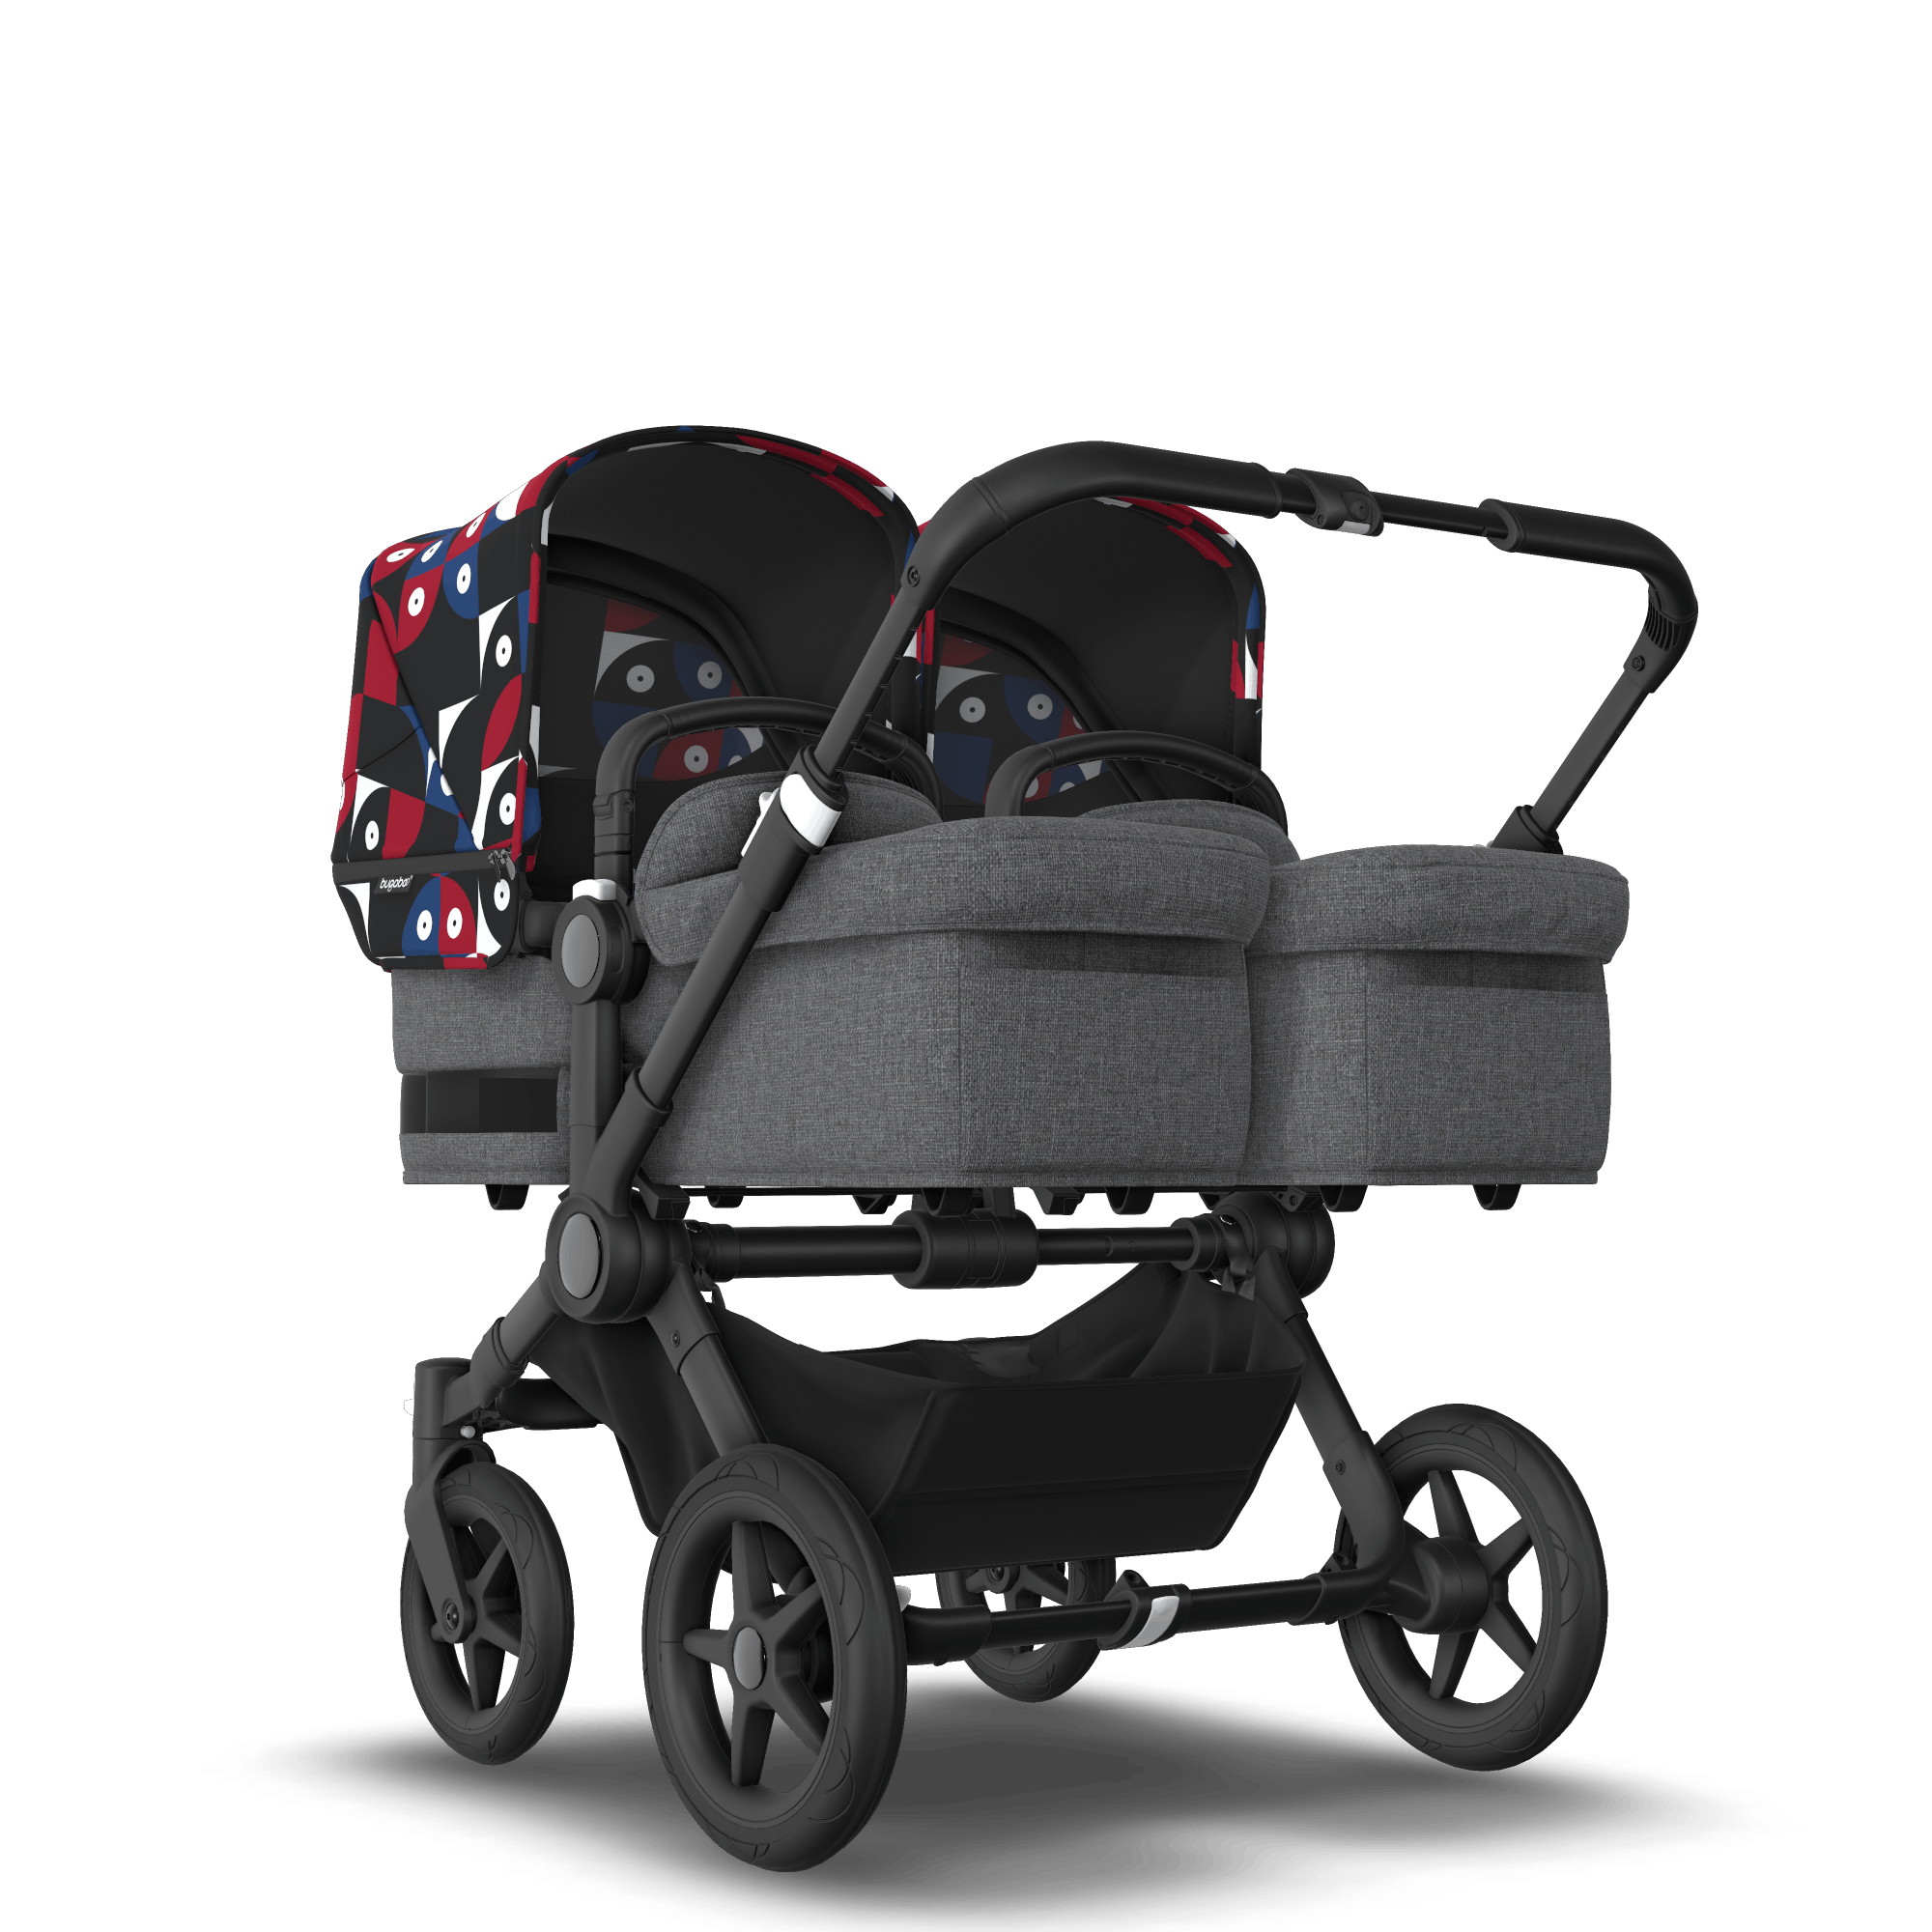 Bugaboo Donkey 5 Twin bassinet and seat stroller black base grey mélange fabrics animal explorer red/blue sun canopy